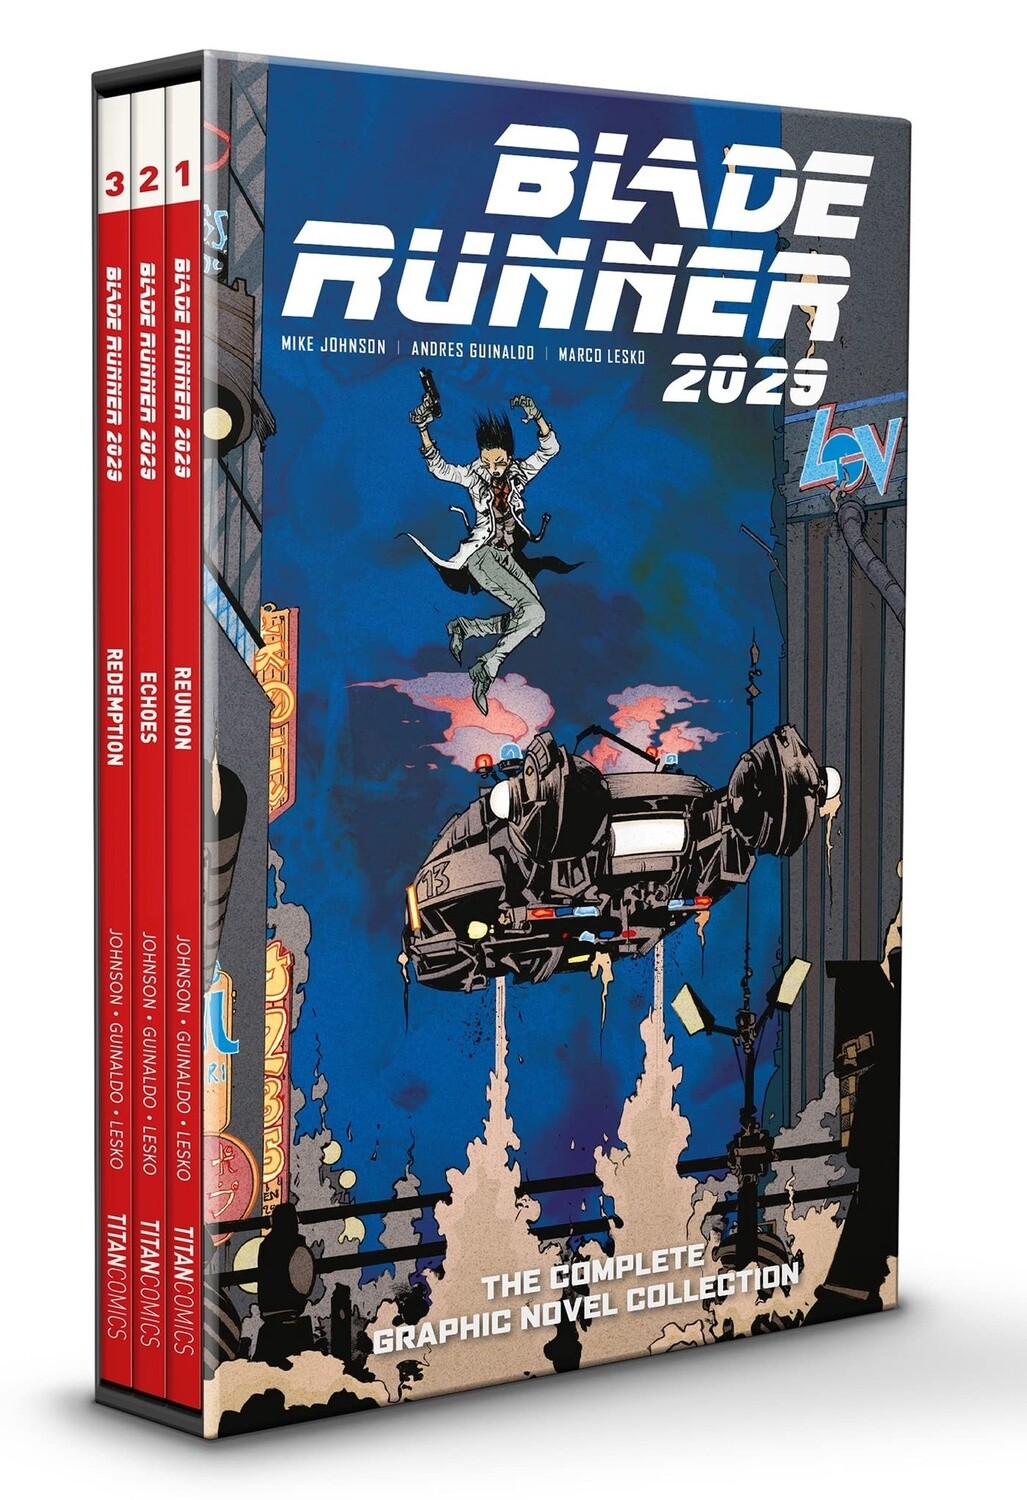 Blade Runner 2029 Vol 1-3 Box Set